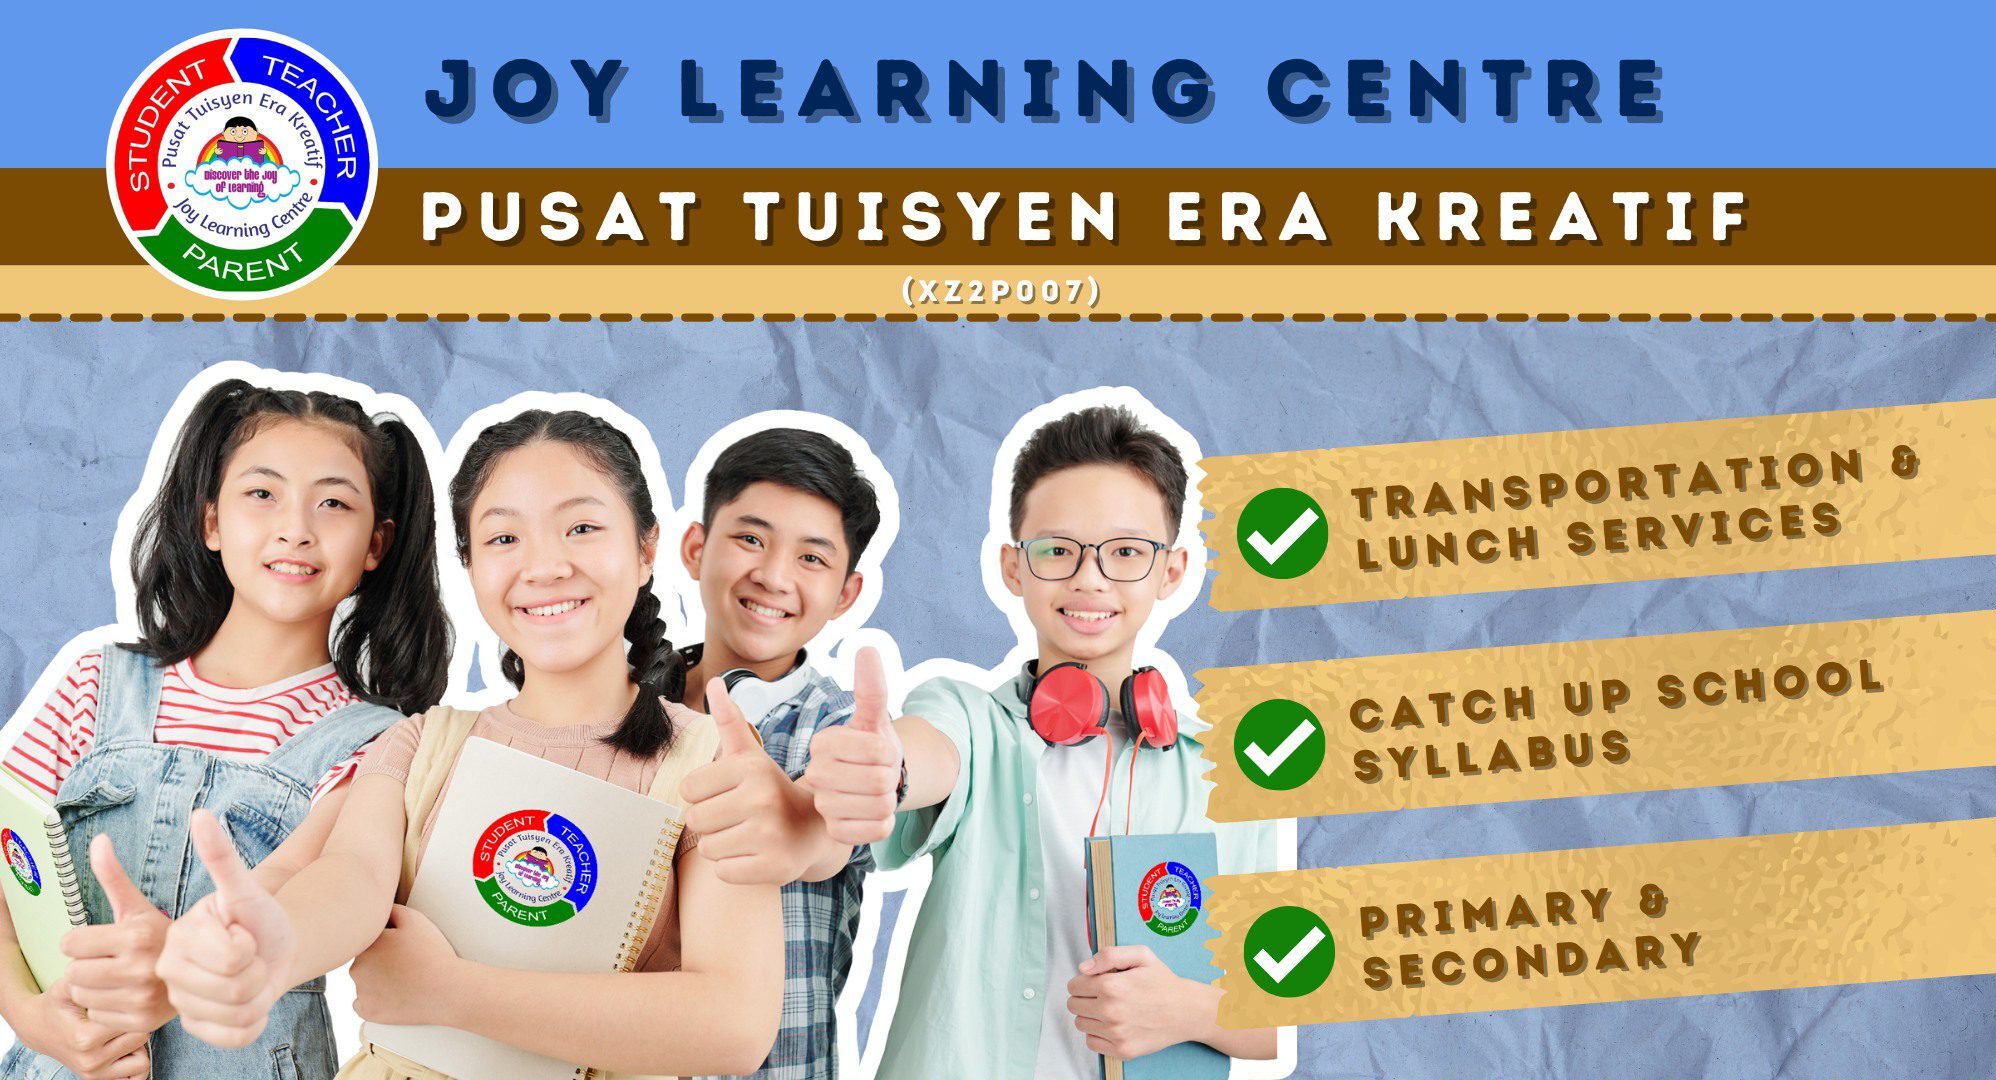 Joy Learning Centre